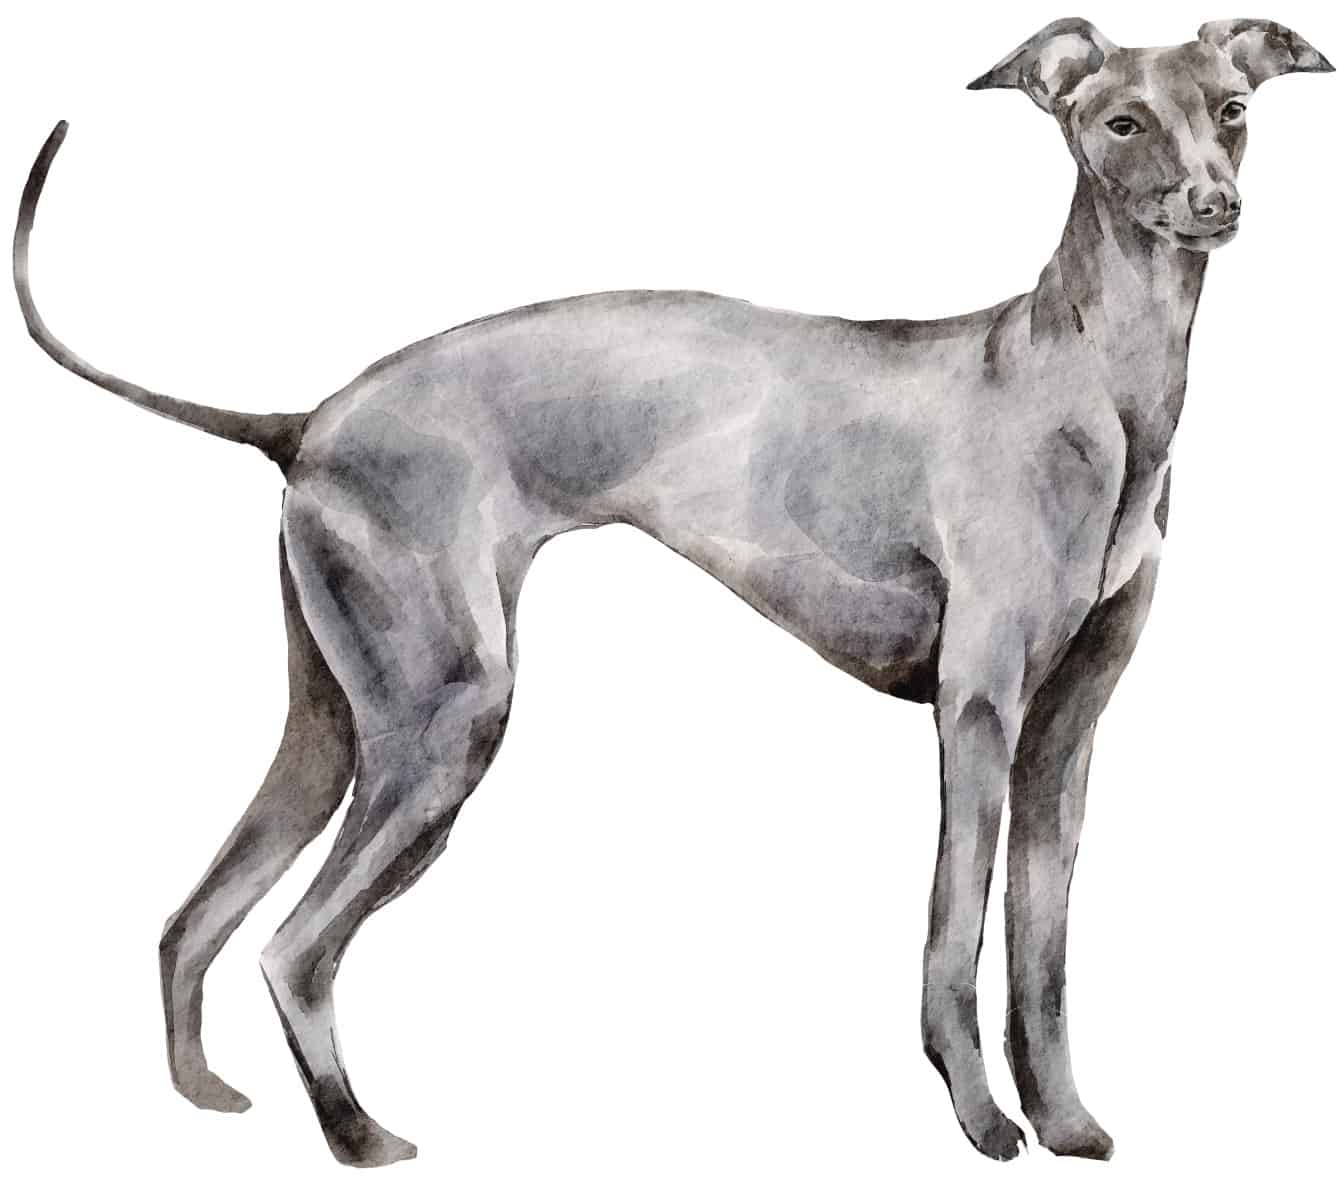 Greyhound dogs